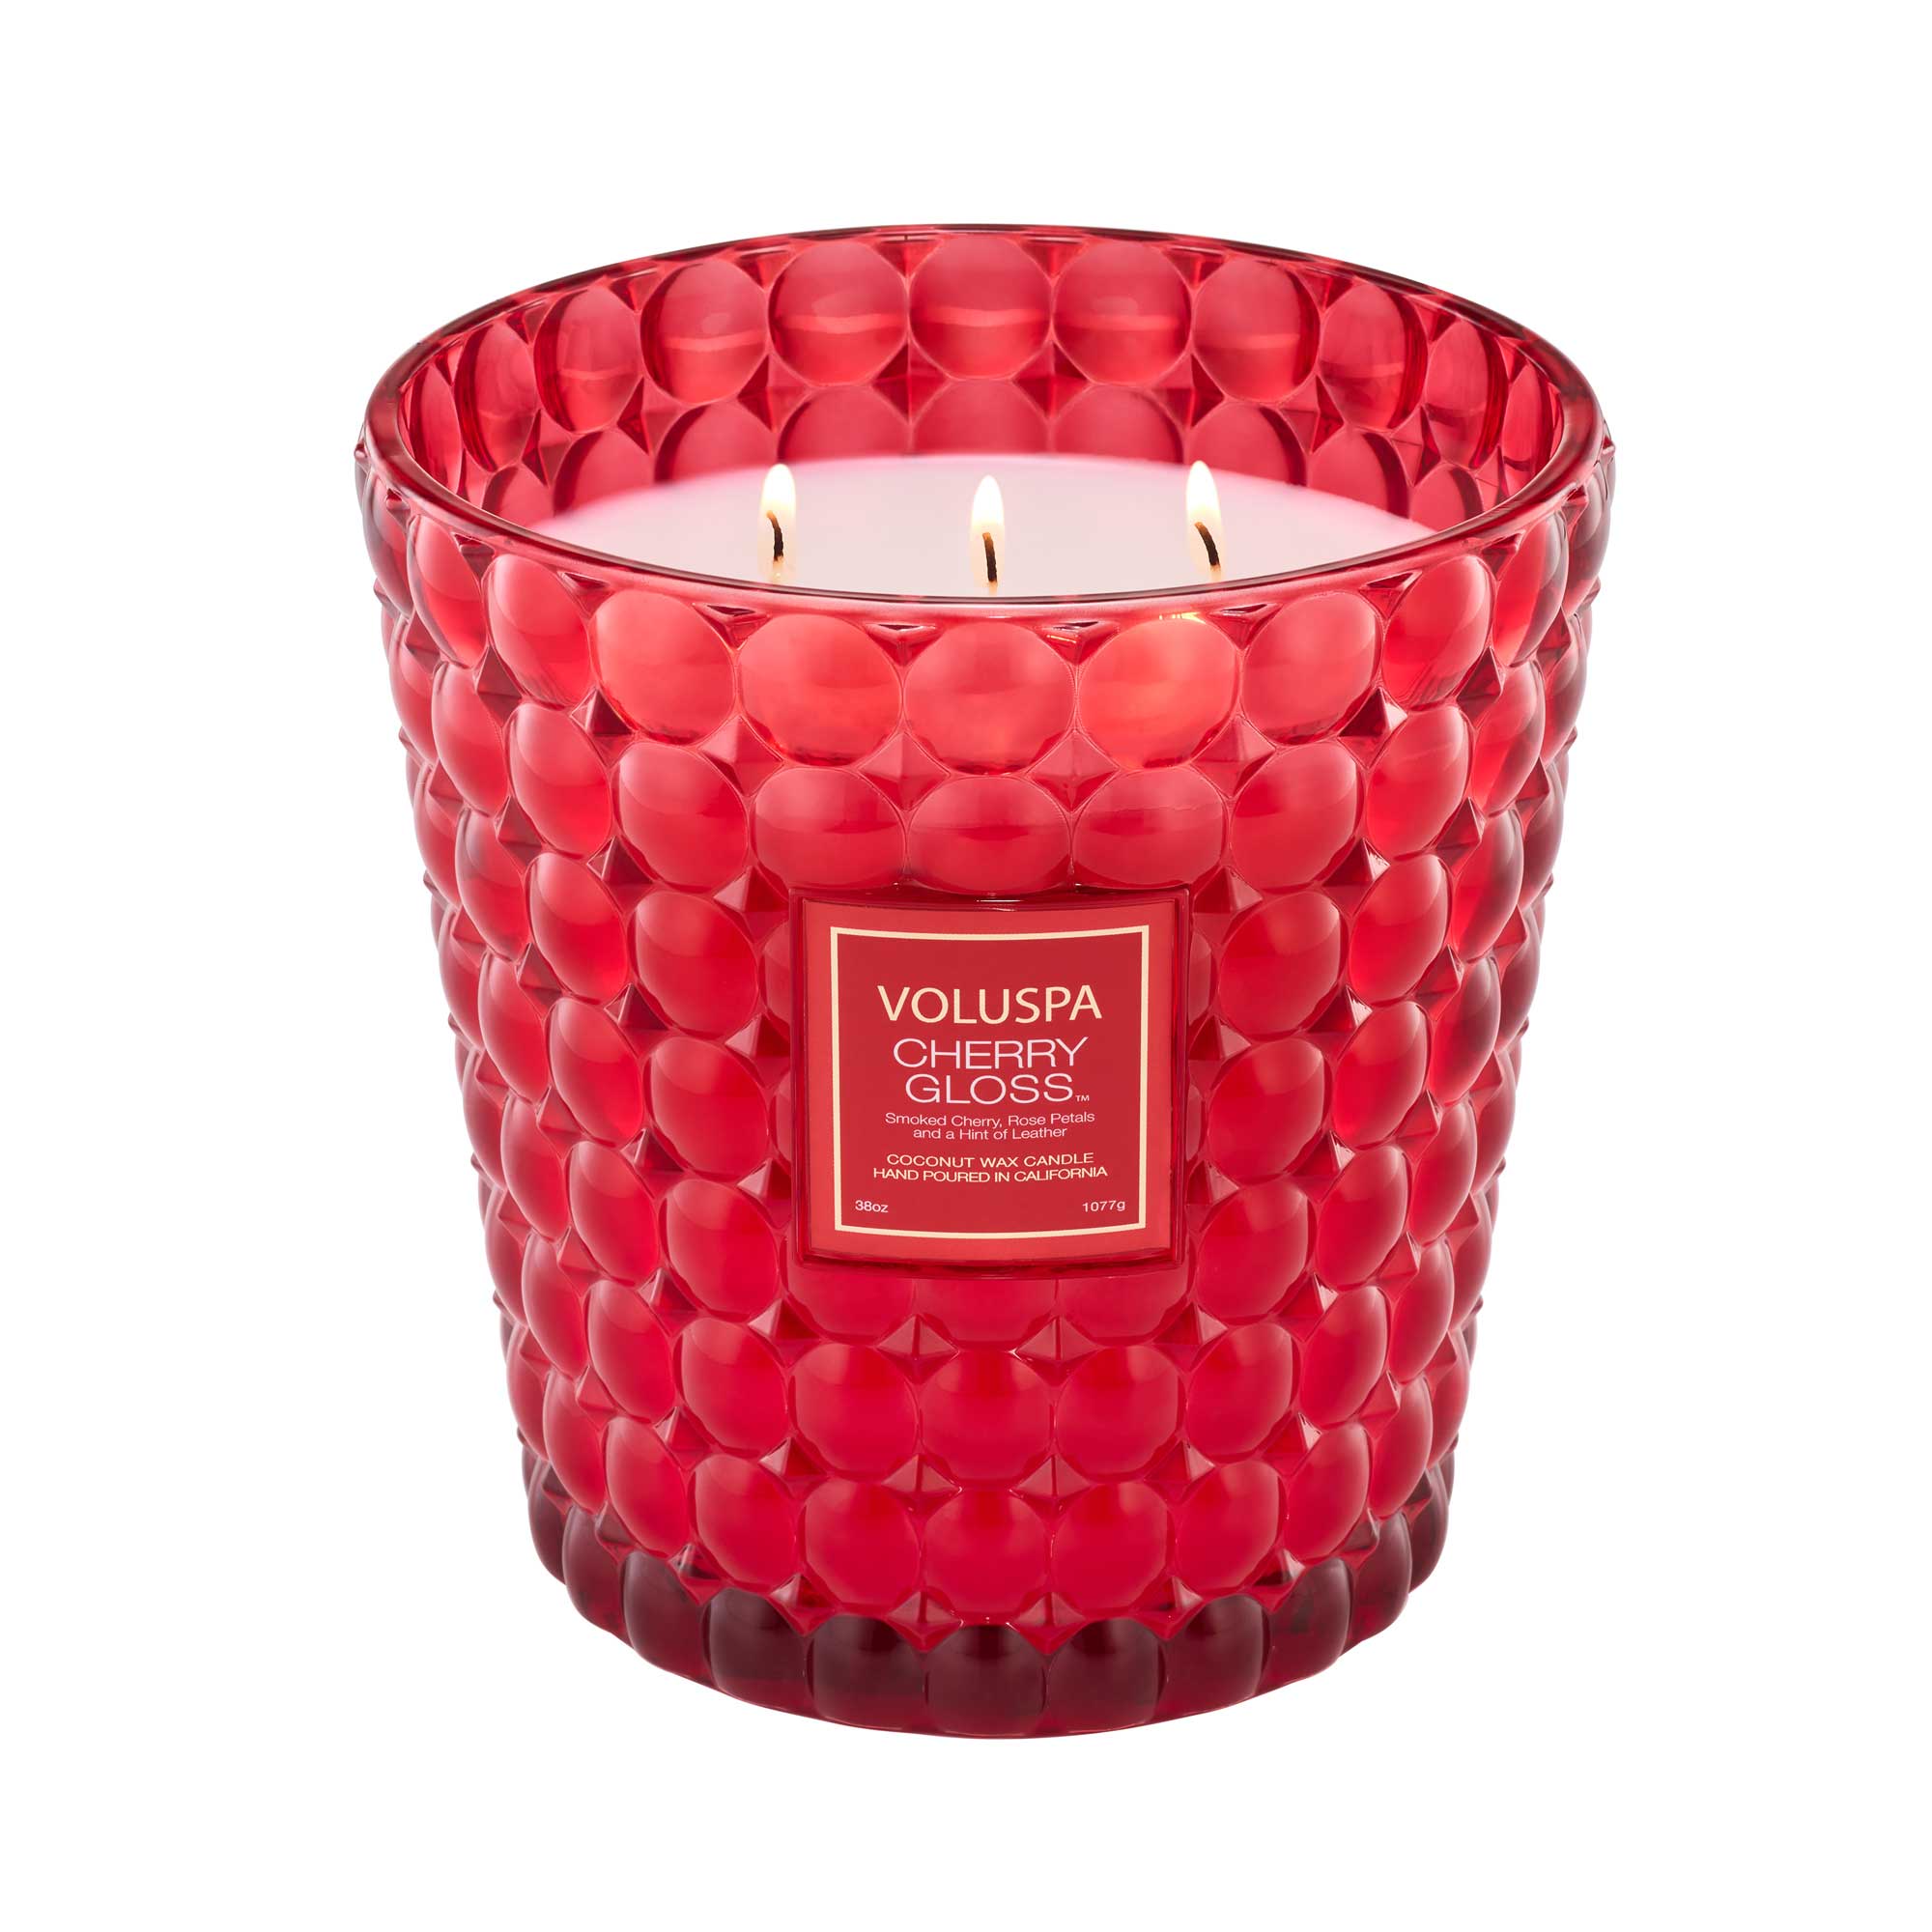 Voluspa Limited Editon Capsule Collection 3 Wick Hearth 38oz Candle - Cherry Gloss / Cherry Gloss